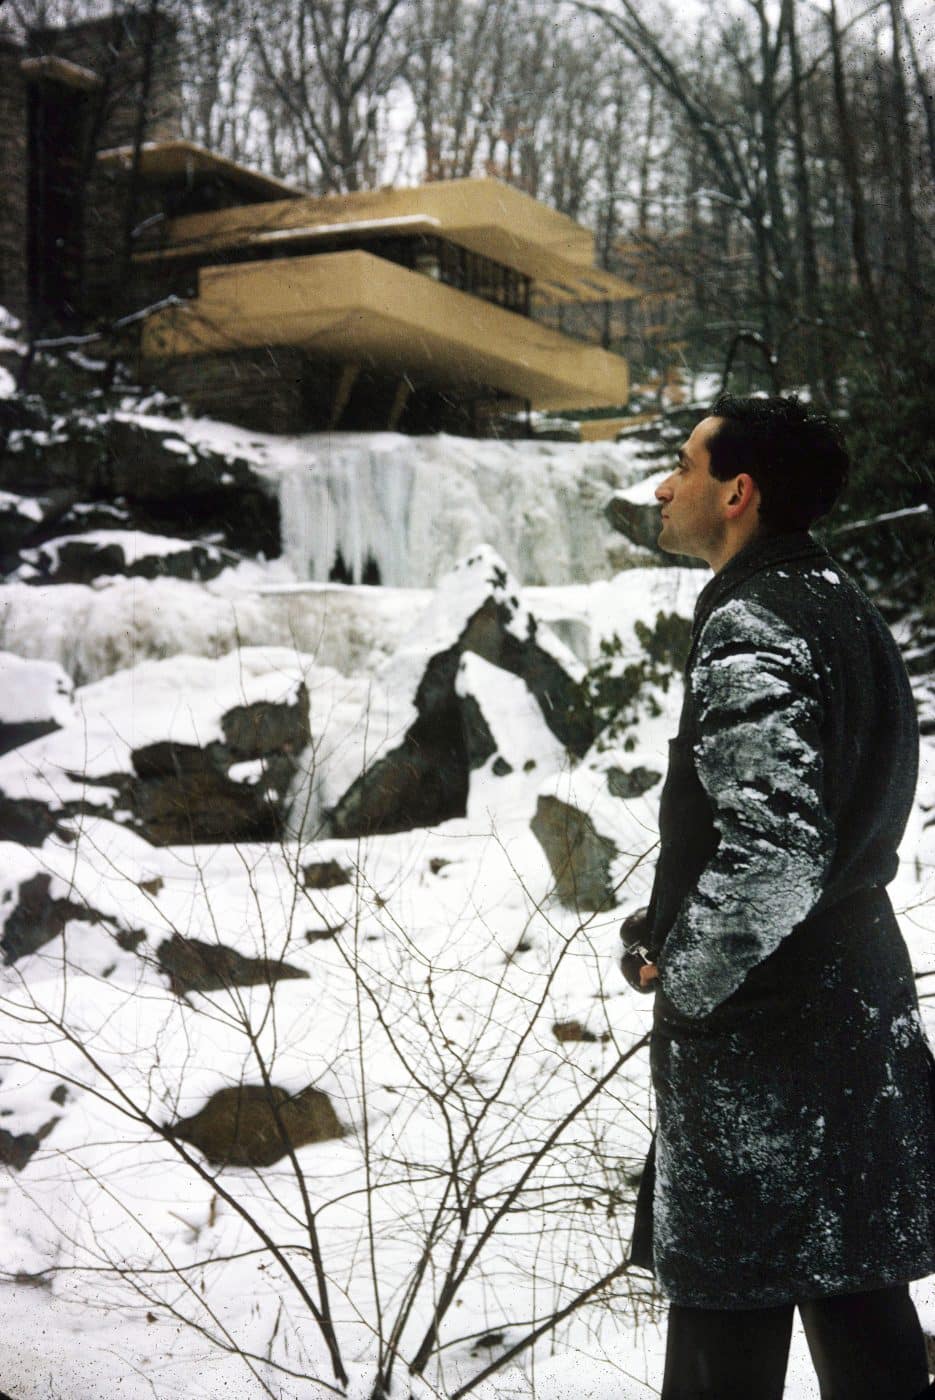 Stern in the snow at Frank Lloyd Wright's Fallingwater in southwestern Pennsylvania